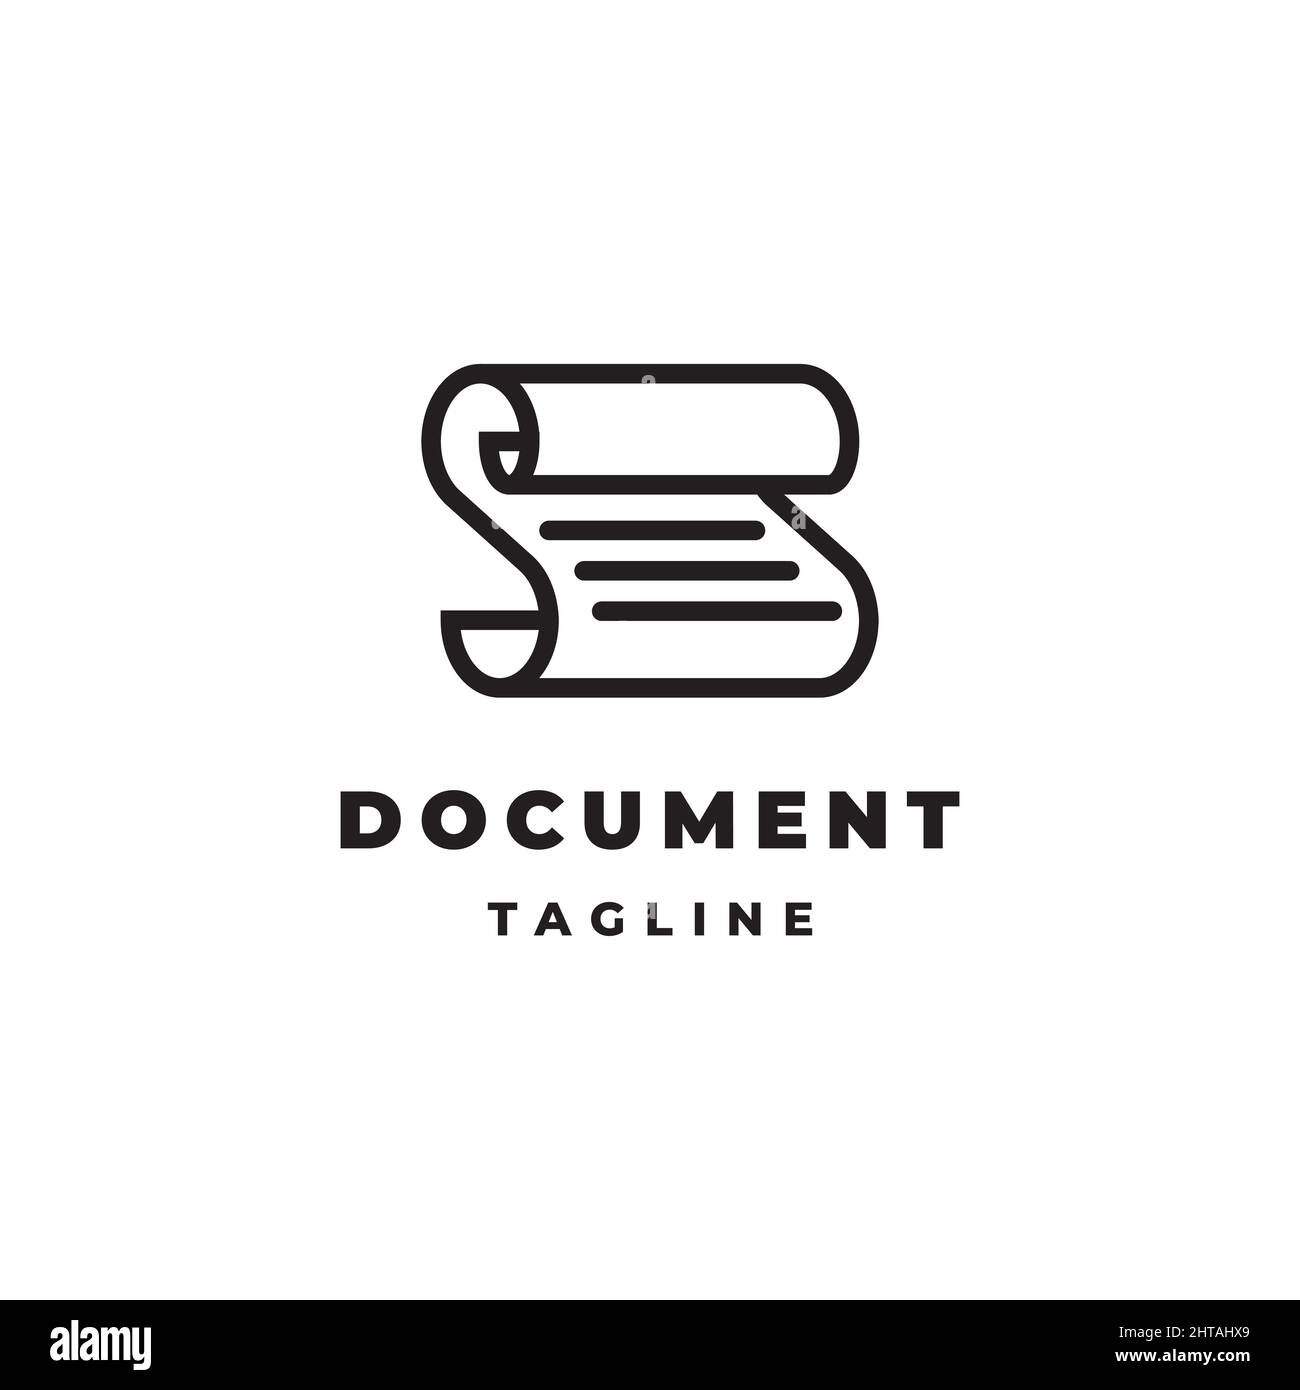 Document symbol logo design inspiration with letter S shape Stock Vector